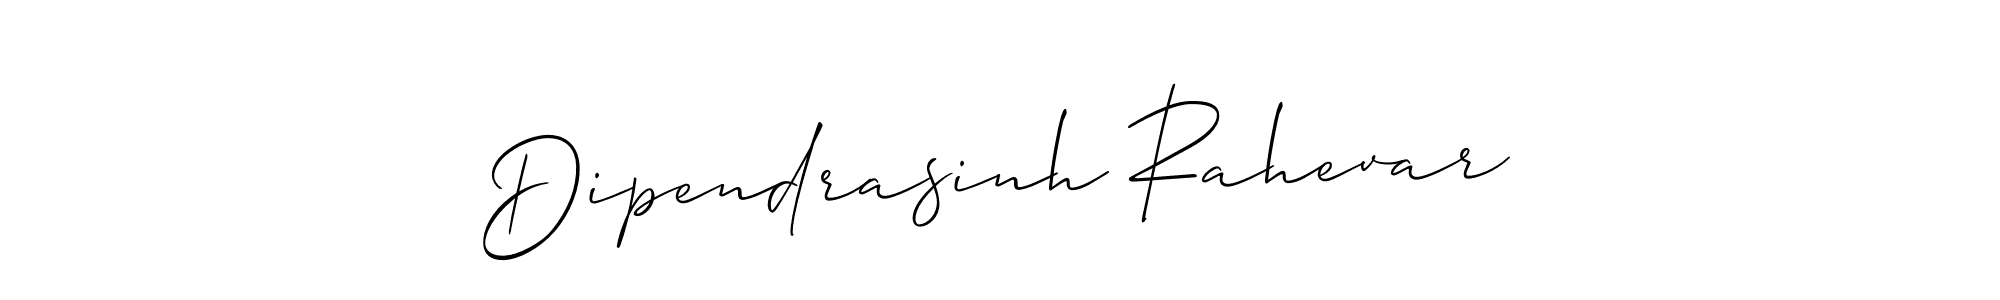 How to Draw Dipendrasinh Rahevar signature style? Allison_Script is a latest design signature styles for name Dipendrasinh Rahevar. Dipendrasinh Rahevar signature style 2 images and pictures png